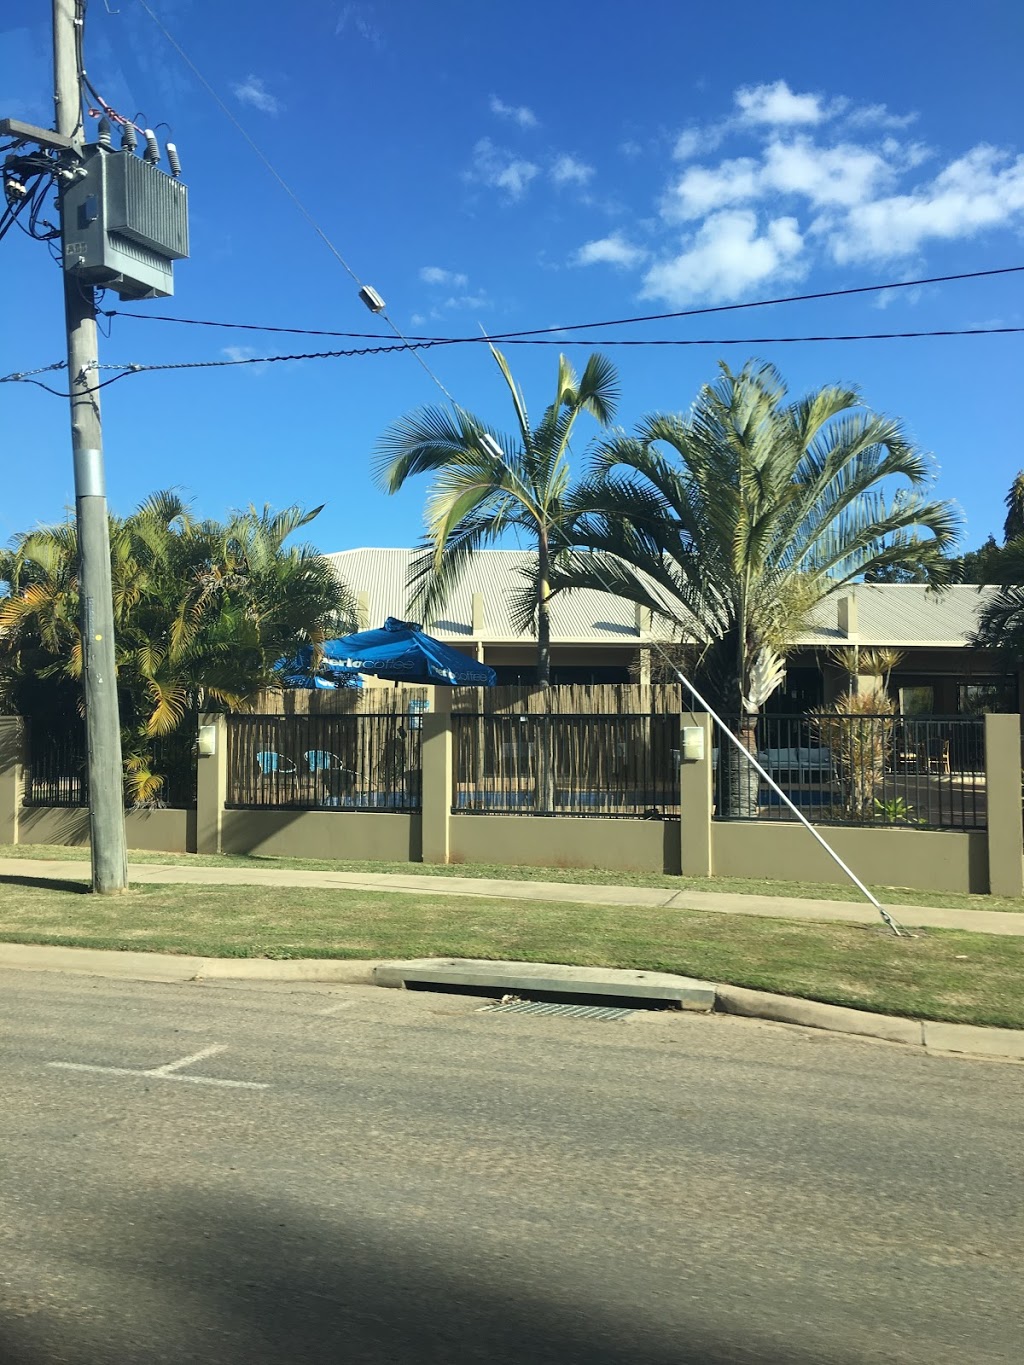 The Palms Motel, Chinchilla | lodging | 64-70 Warrego Hwy, Chinchilla QLD 4413, Australia | 0746729888 OR +61 7 4672 9888